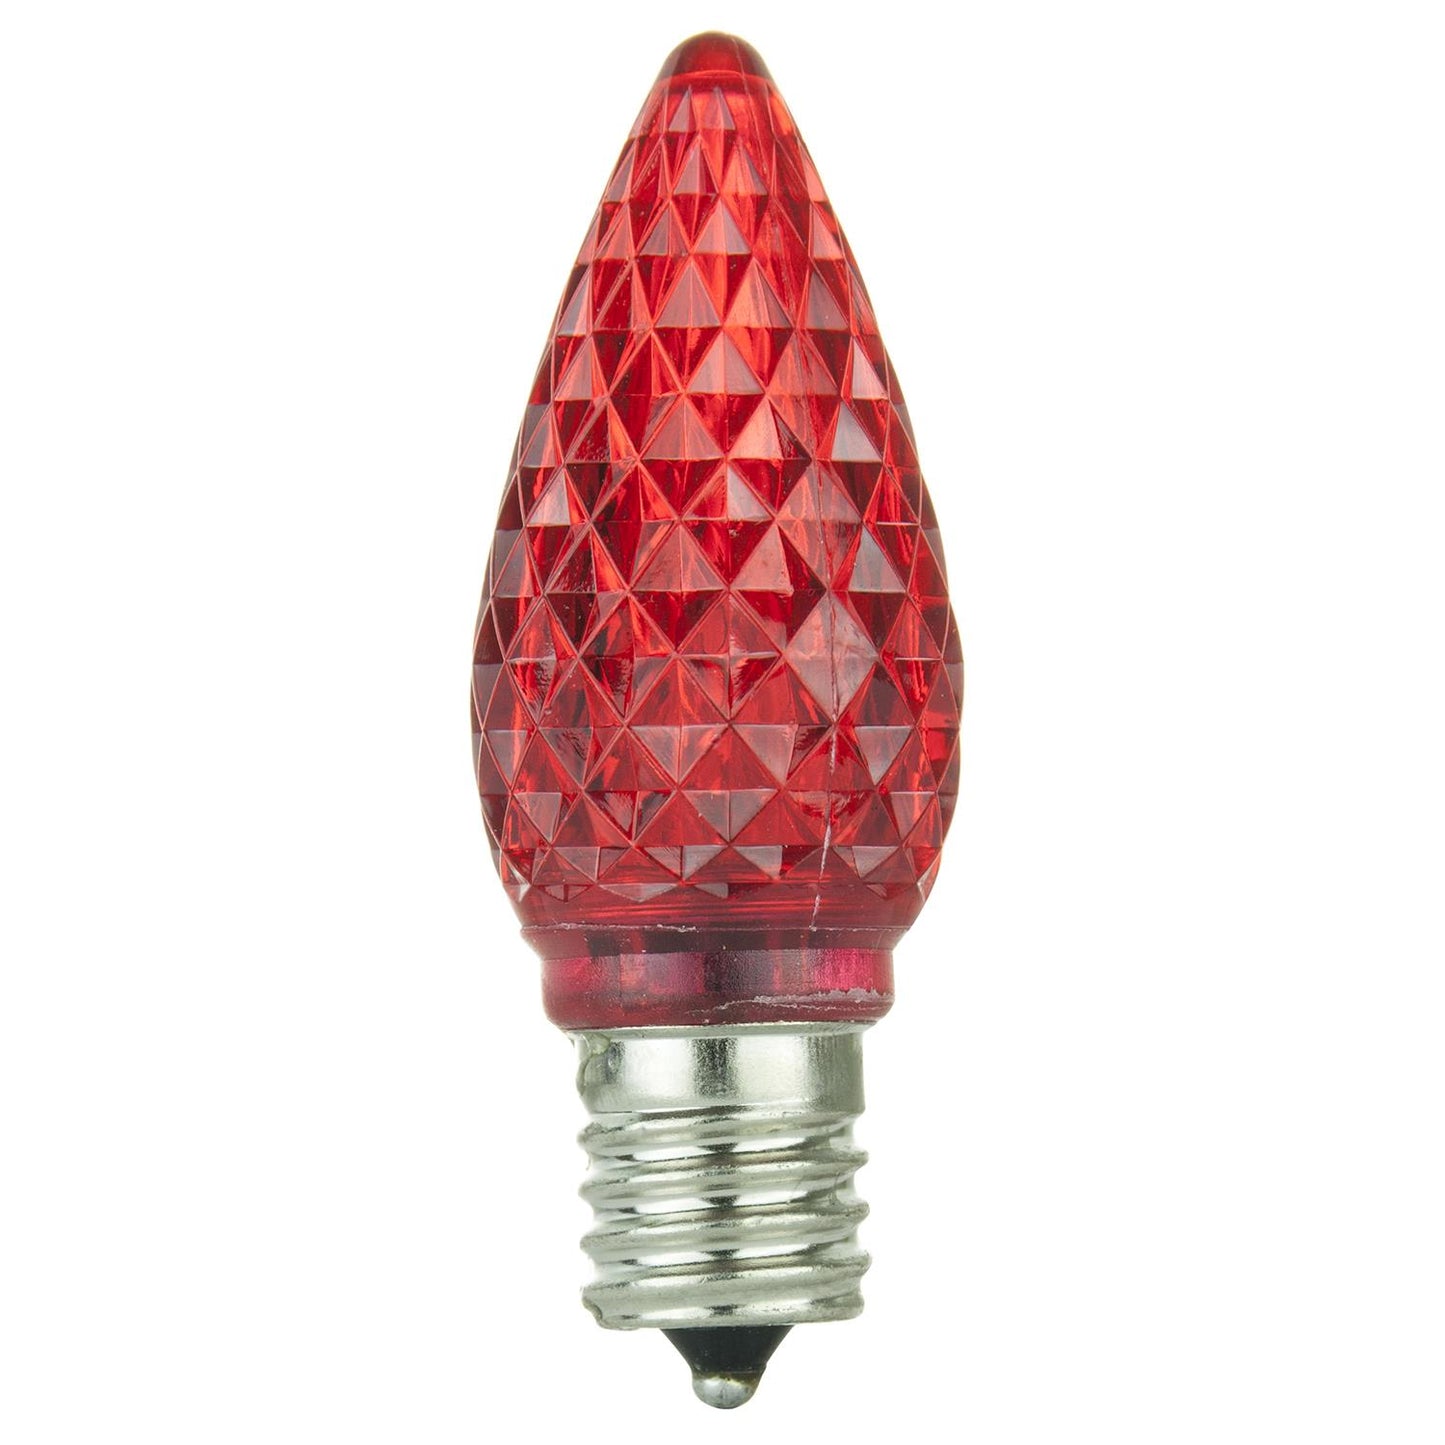 Sunlite LED C9 0.4W Red Colored Decorative Chandelier Light Bulbs, Intermediate (E17) Base